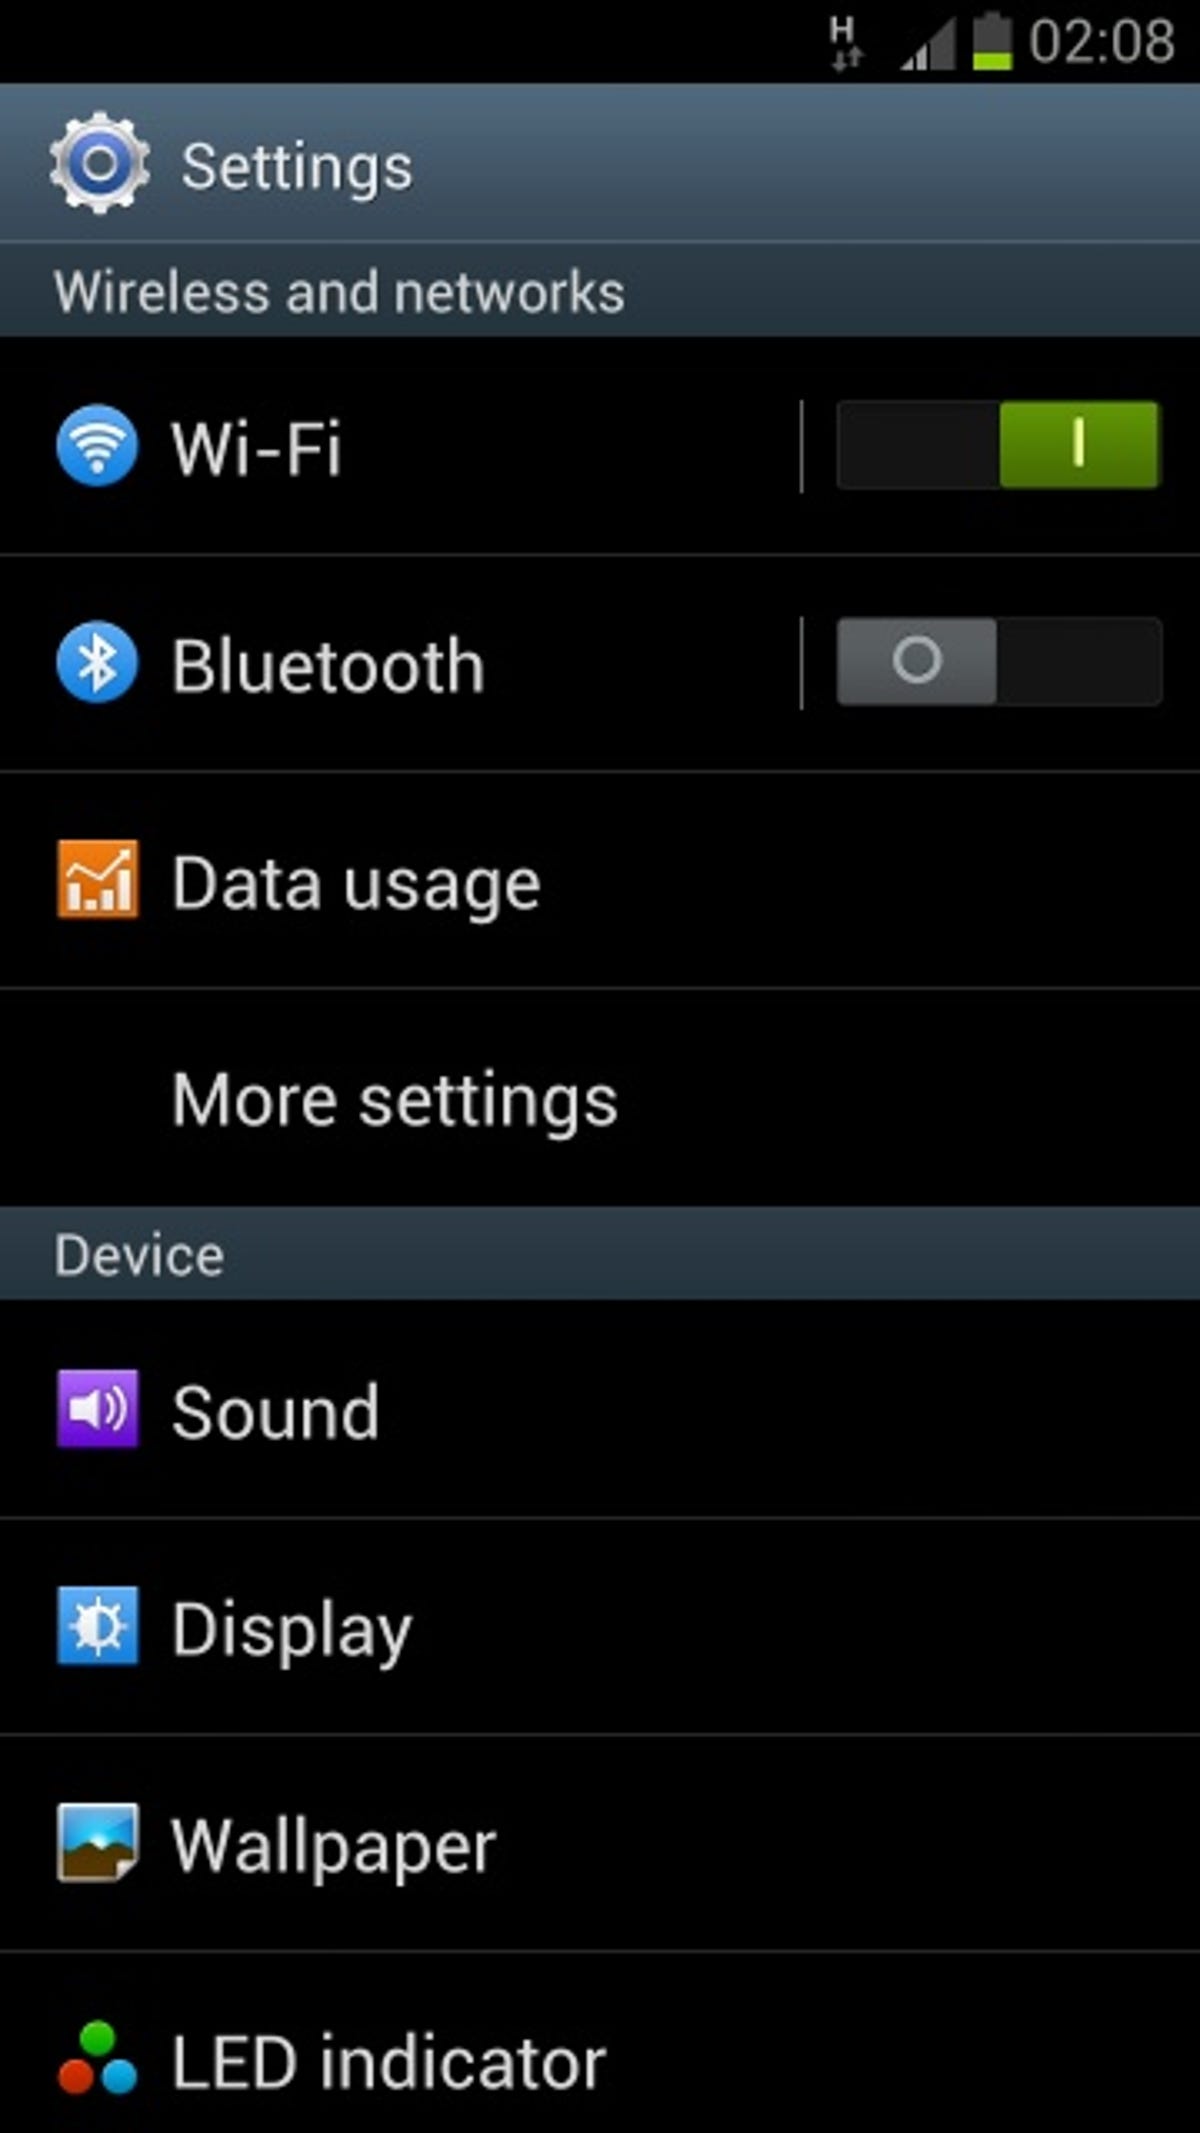 Samsung Galaxy S3 battery life: screen timeoutWi-Fi settings